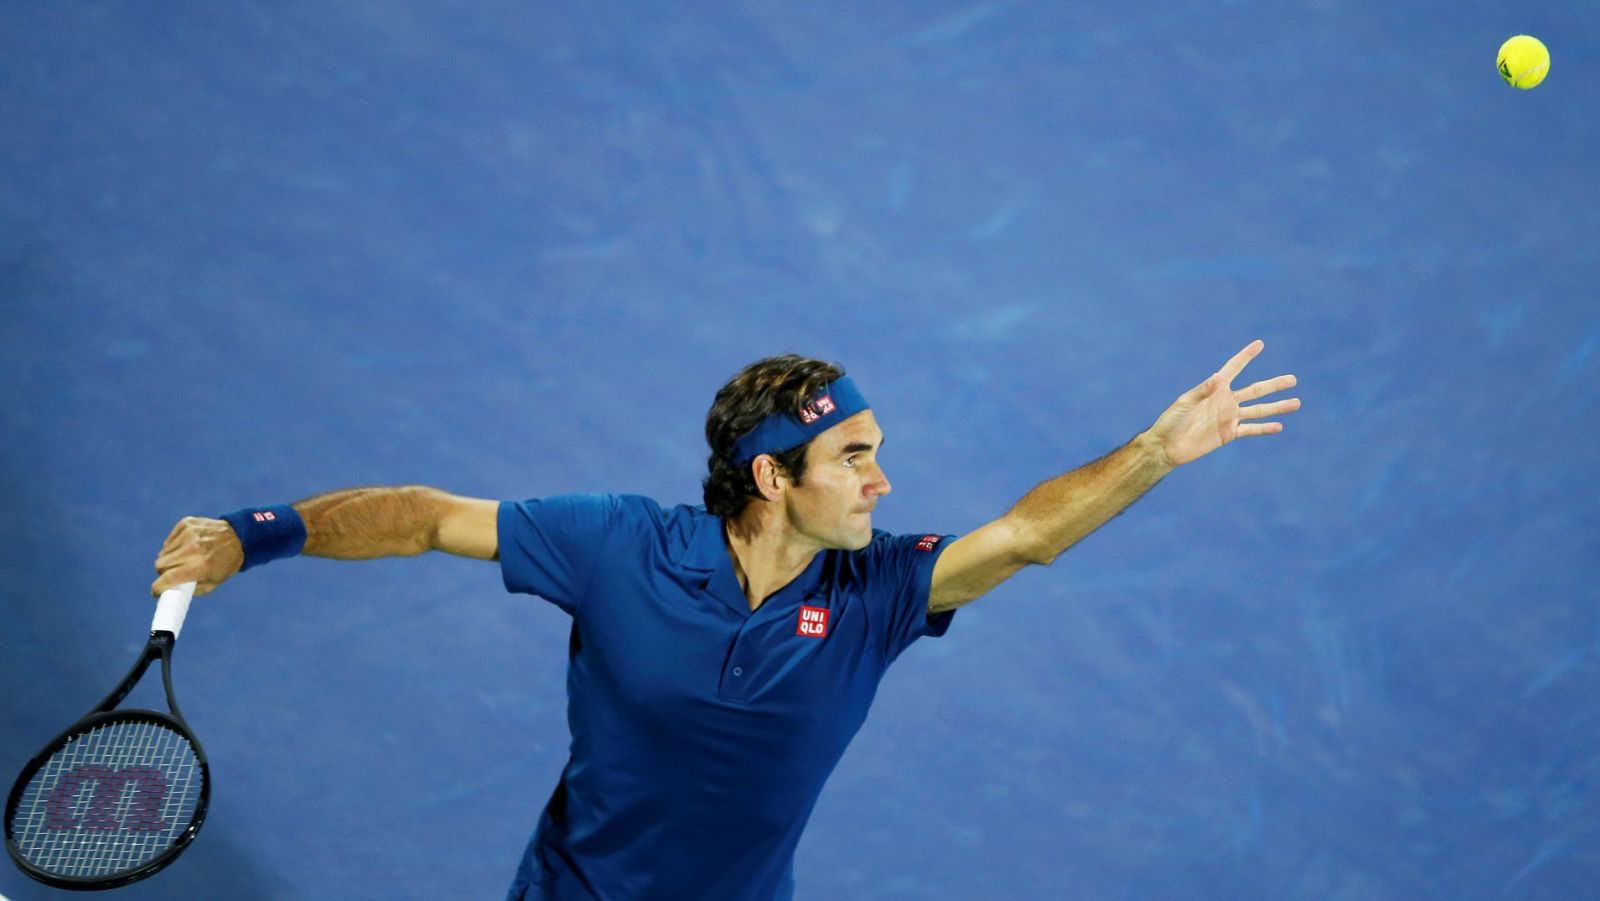  Imagen del tenista Roger Federer